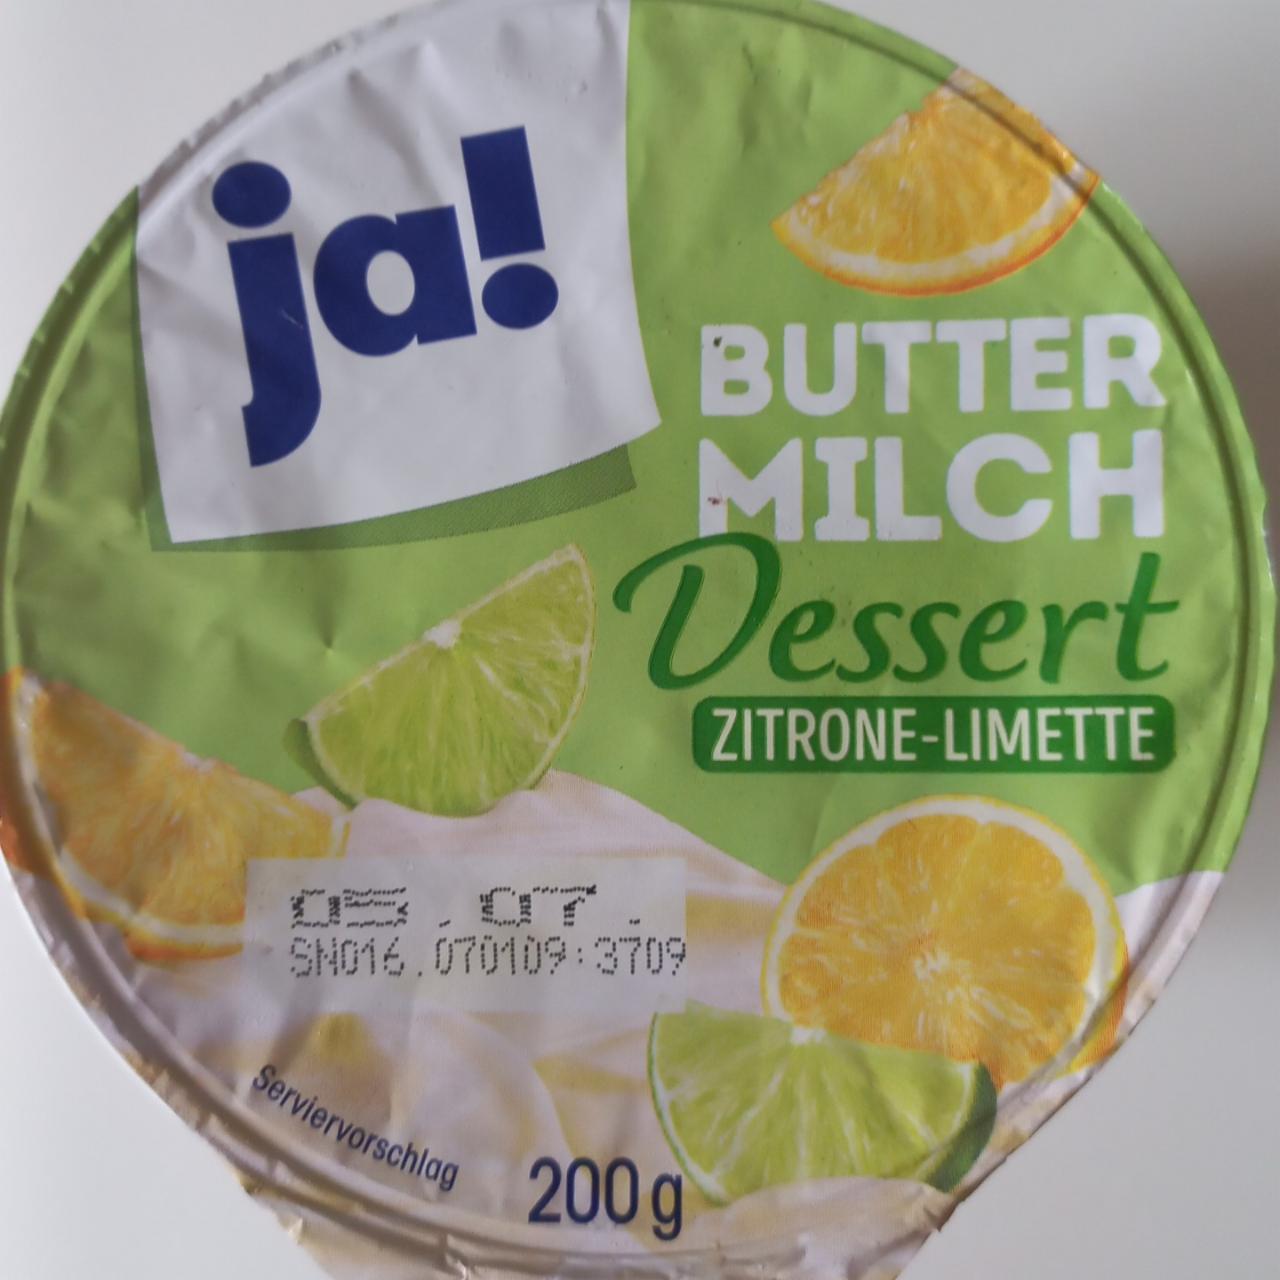 Fotografie - Butter Milch Dessert Zitrone-Limette Ja!